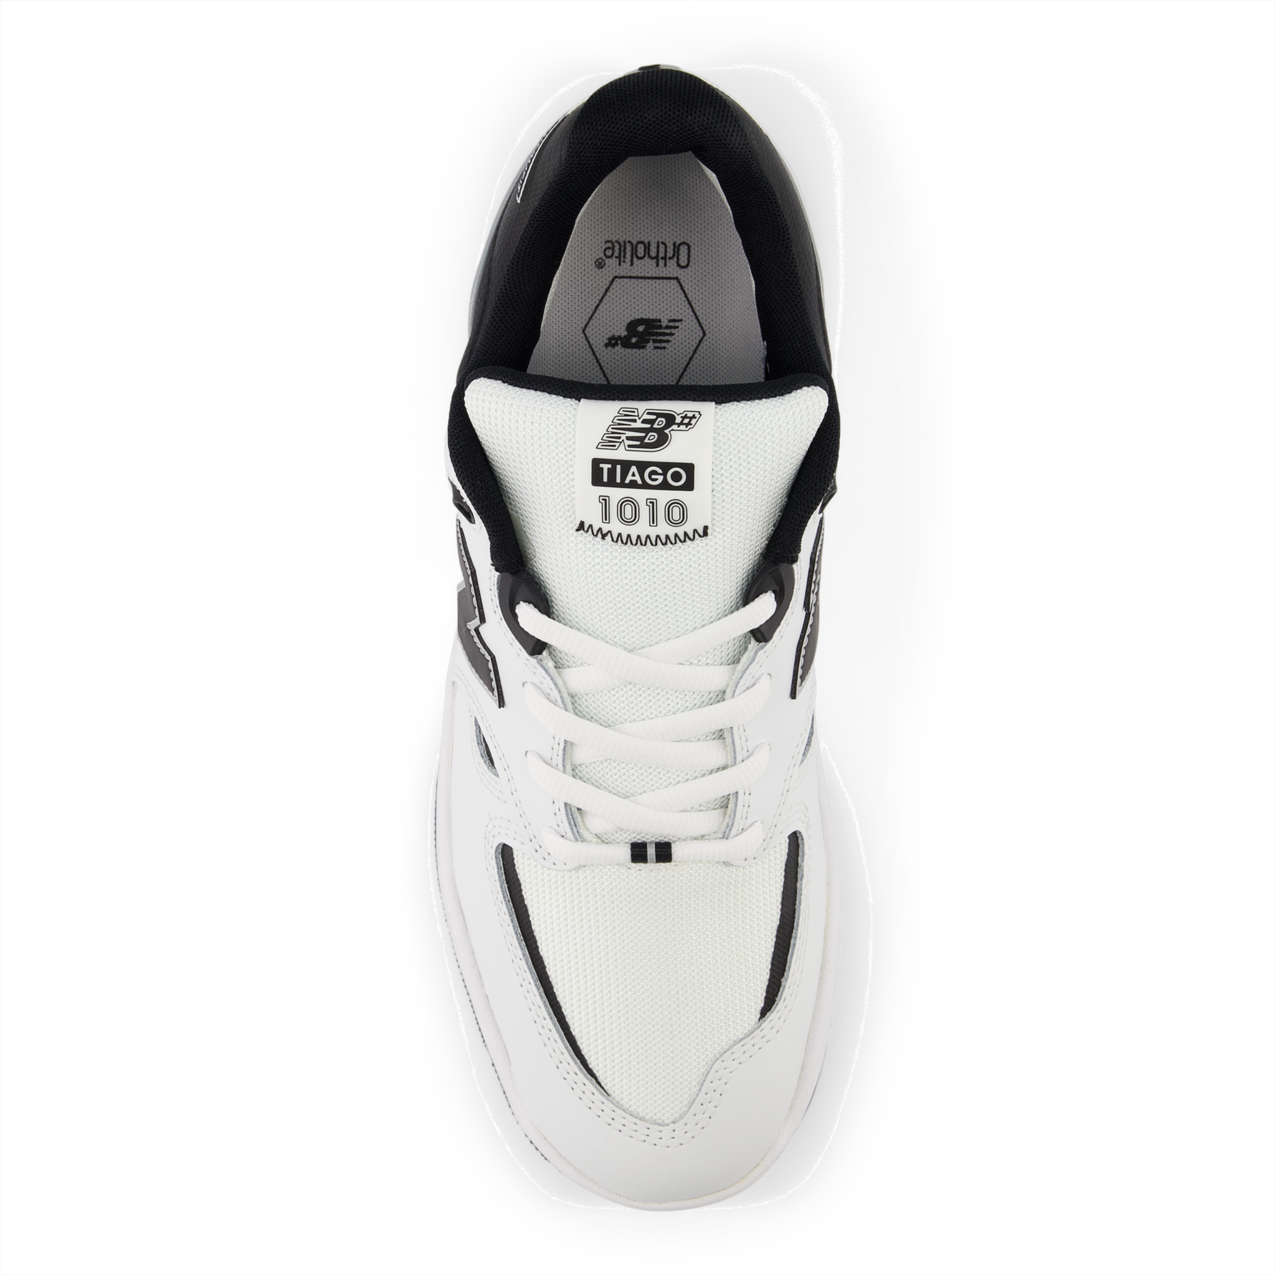 New Balance Numeric Men's Tiago Lemos 1010 White Black Shoes